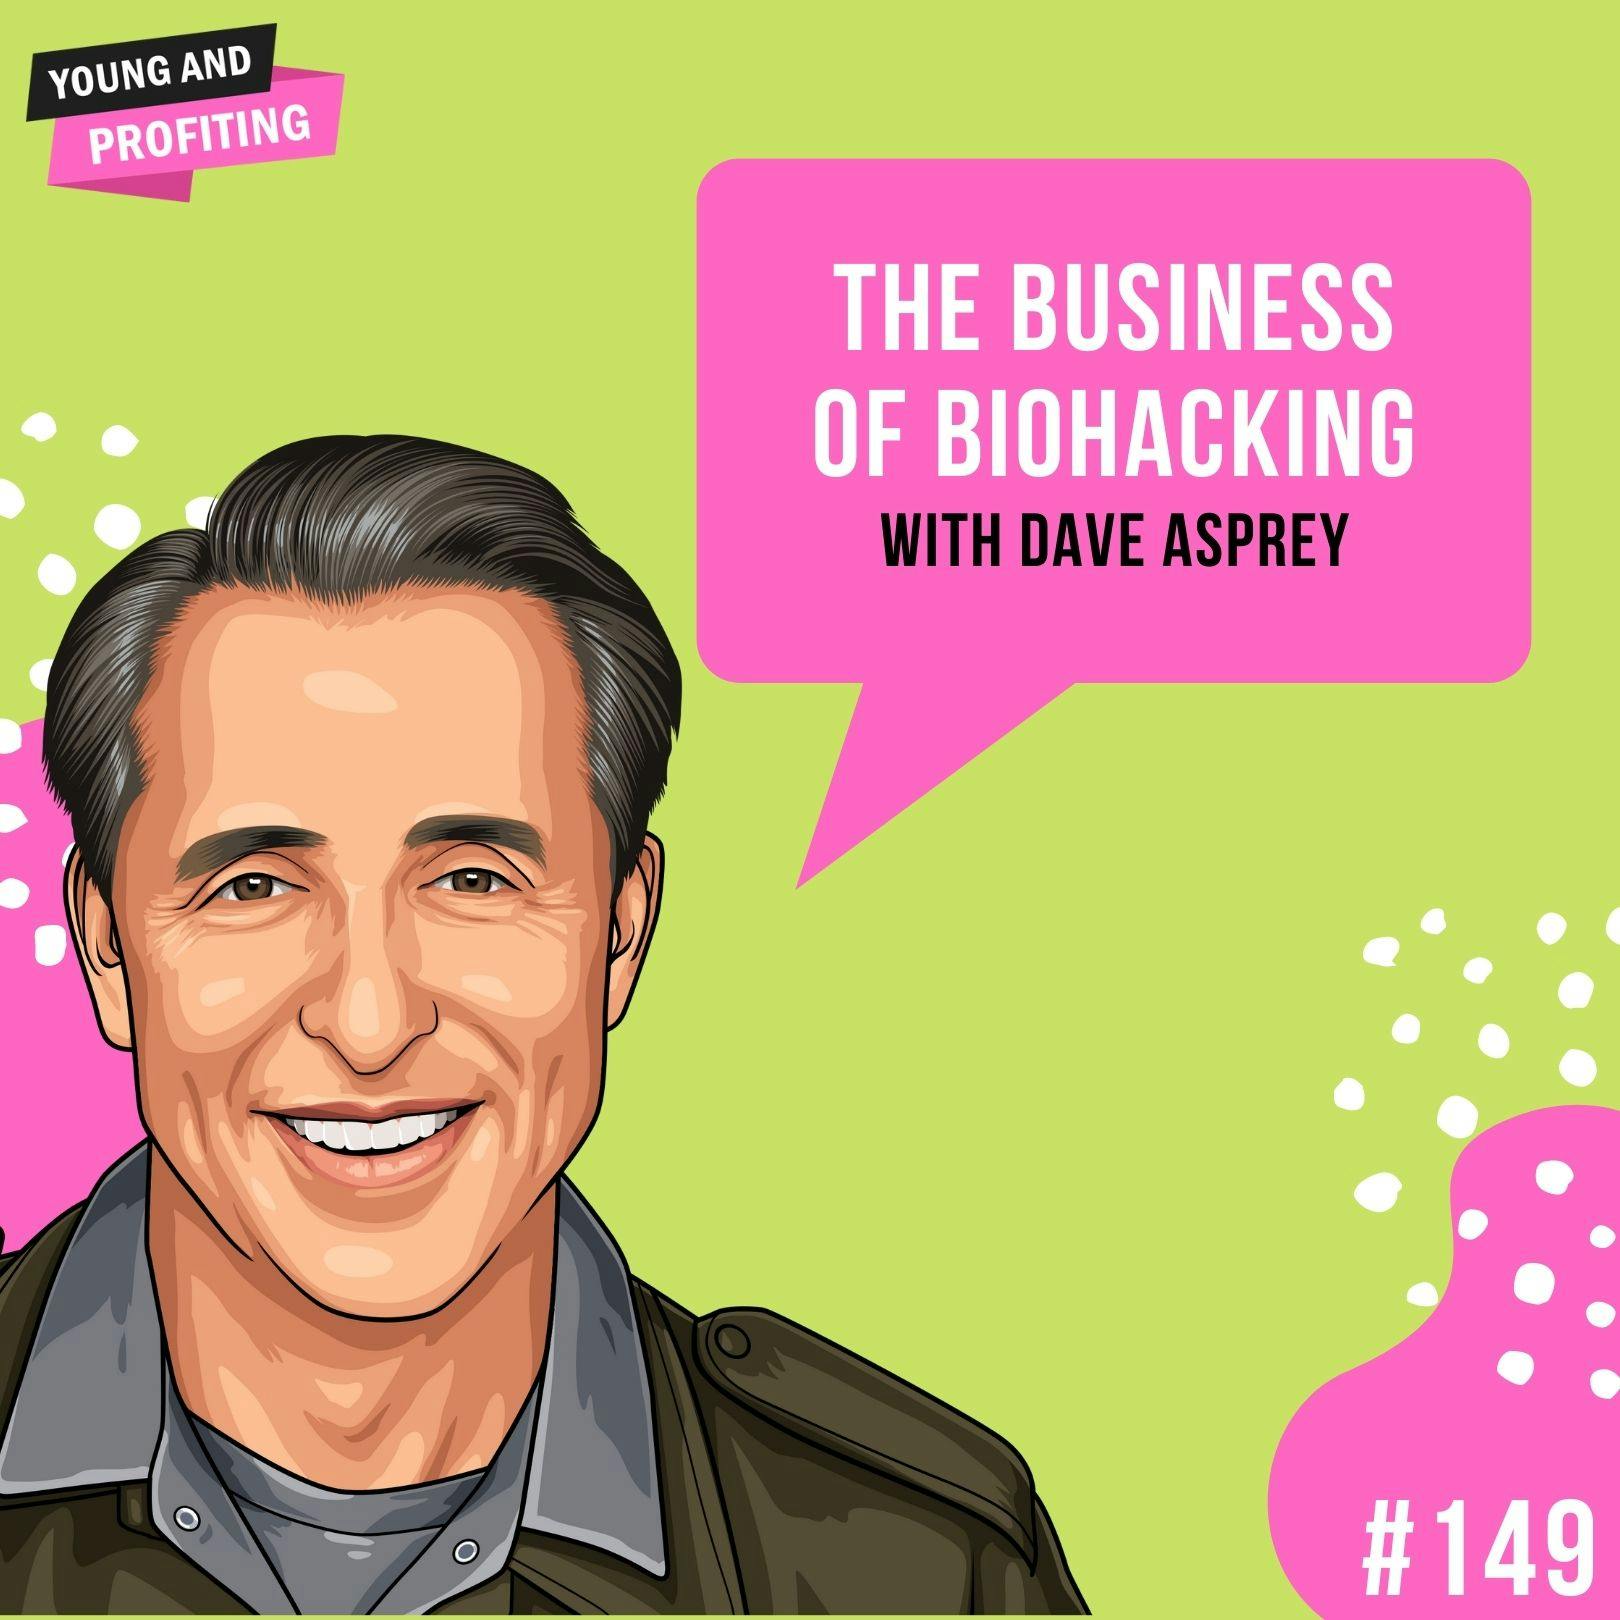 Dave Asprey: The Business of Biohacking | E149 by Hala Taha | YAP Media Network